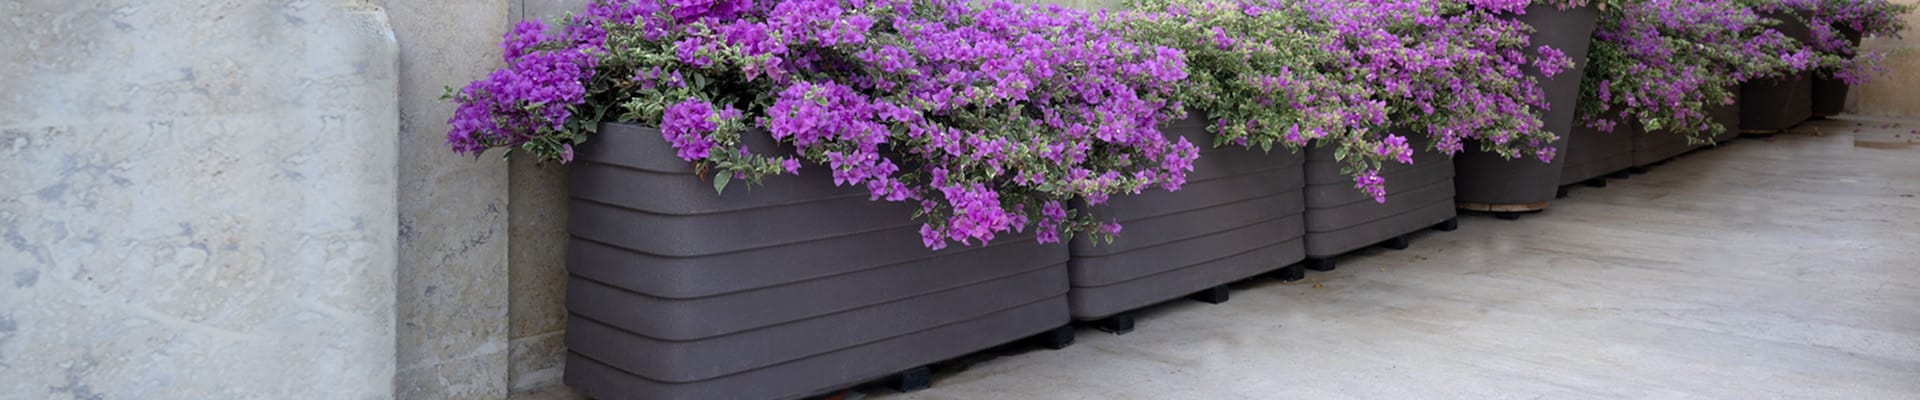 Slat Self Watering Deck Boxes with Purple Flowers